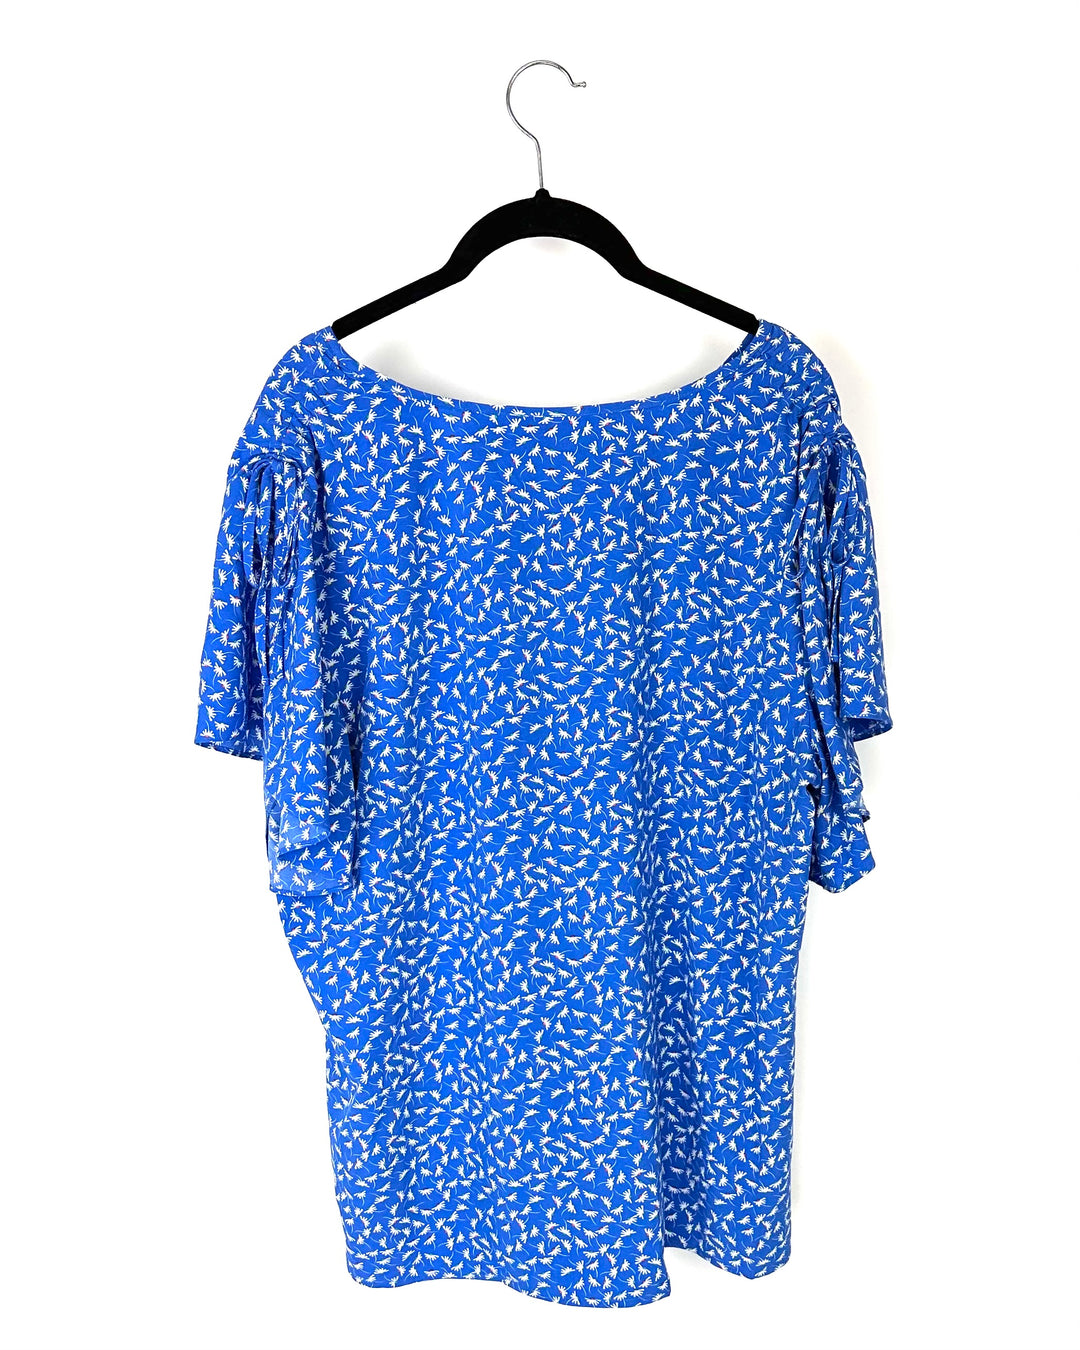 Blue Floral Short-Sleeve Blouse - Size 14-16